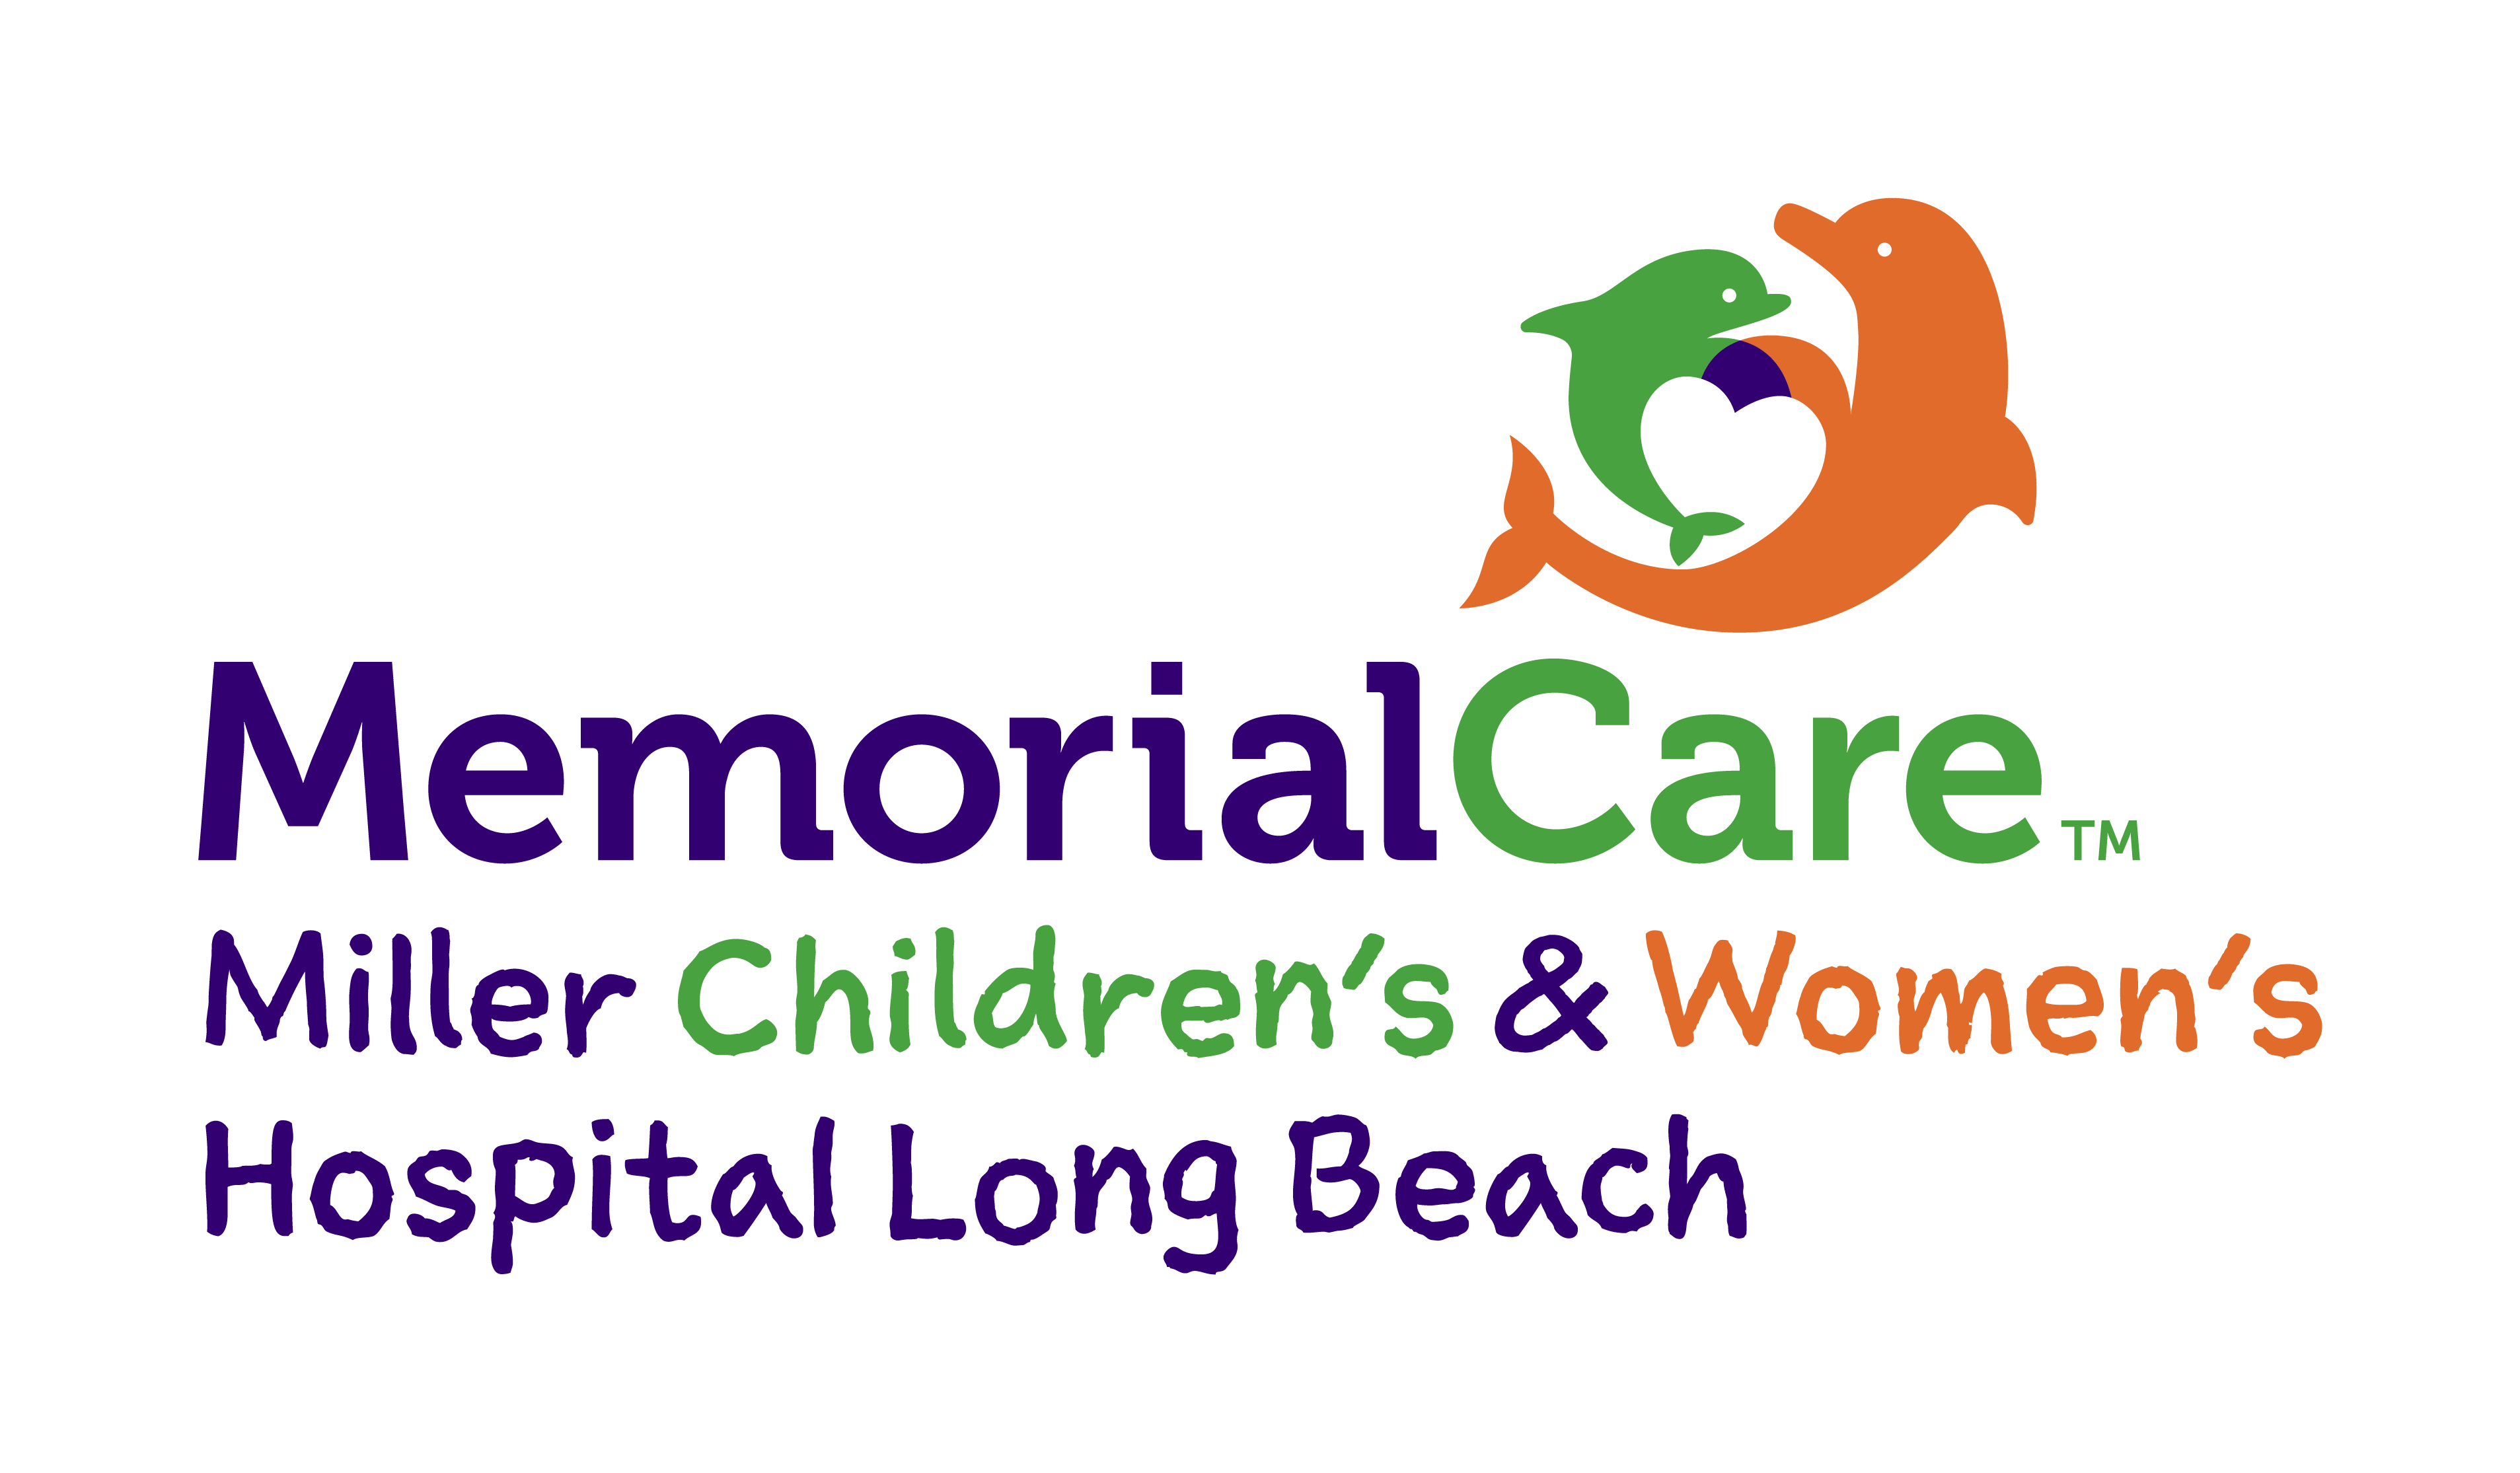 MemorialCare Miller Children’s & Women’s Hospital Long Beach